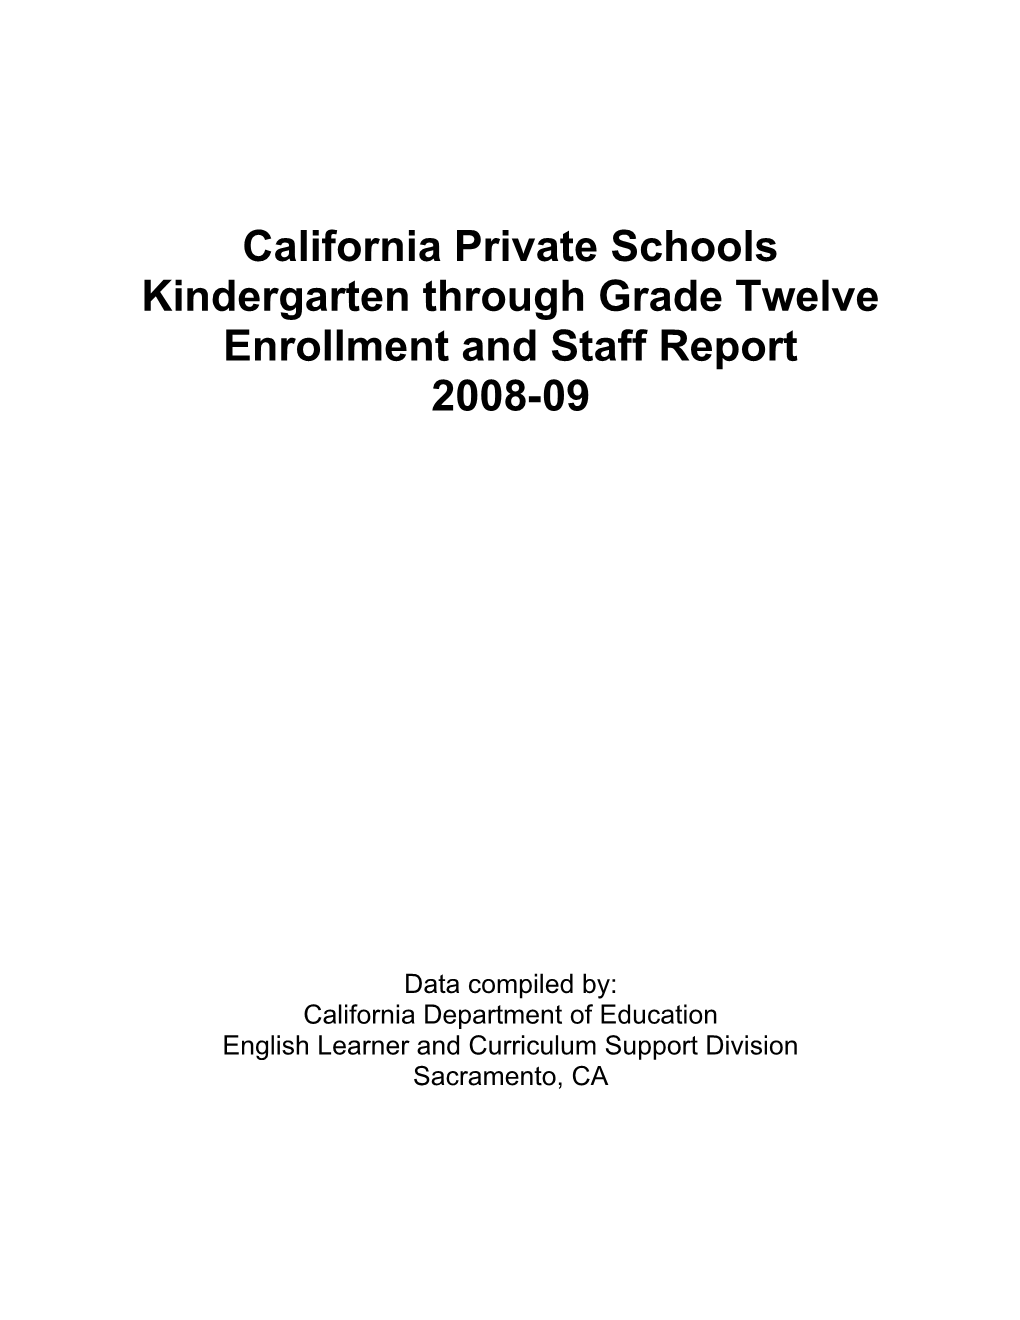 Enrollment & Staff in CA Private Schls 2008-09 - Private Schools (CA Dept of Education)